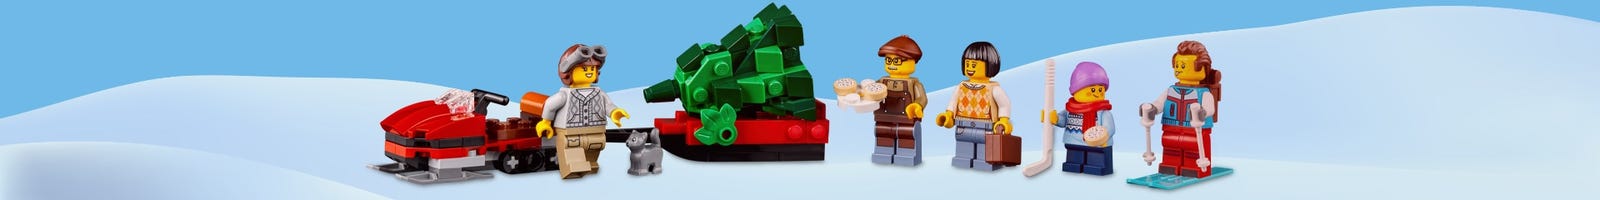 Salopette de pluie doublée polaire - Lego - LWPUELO 703 - Dark Navy